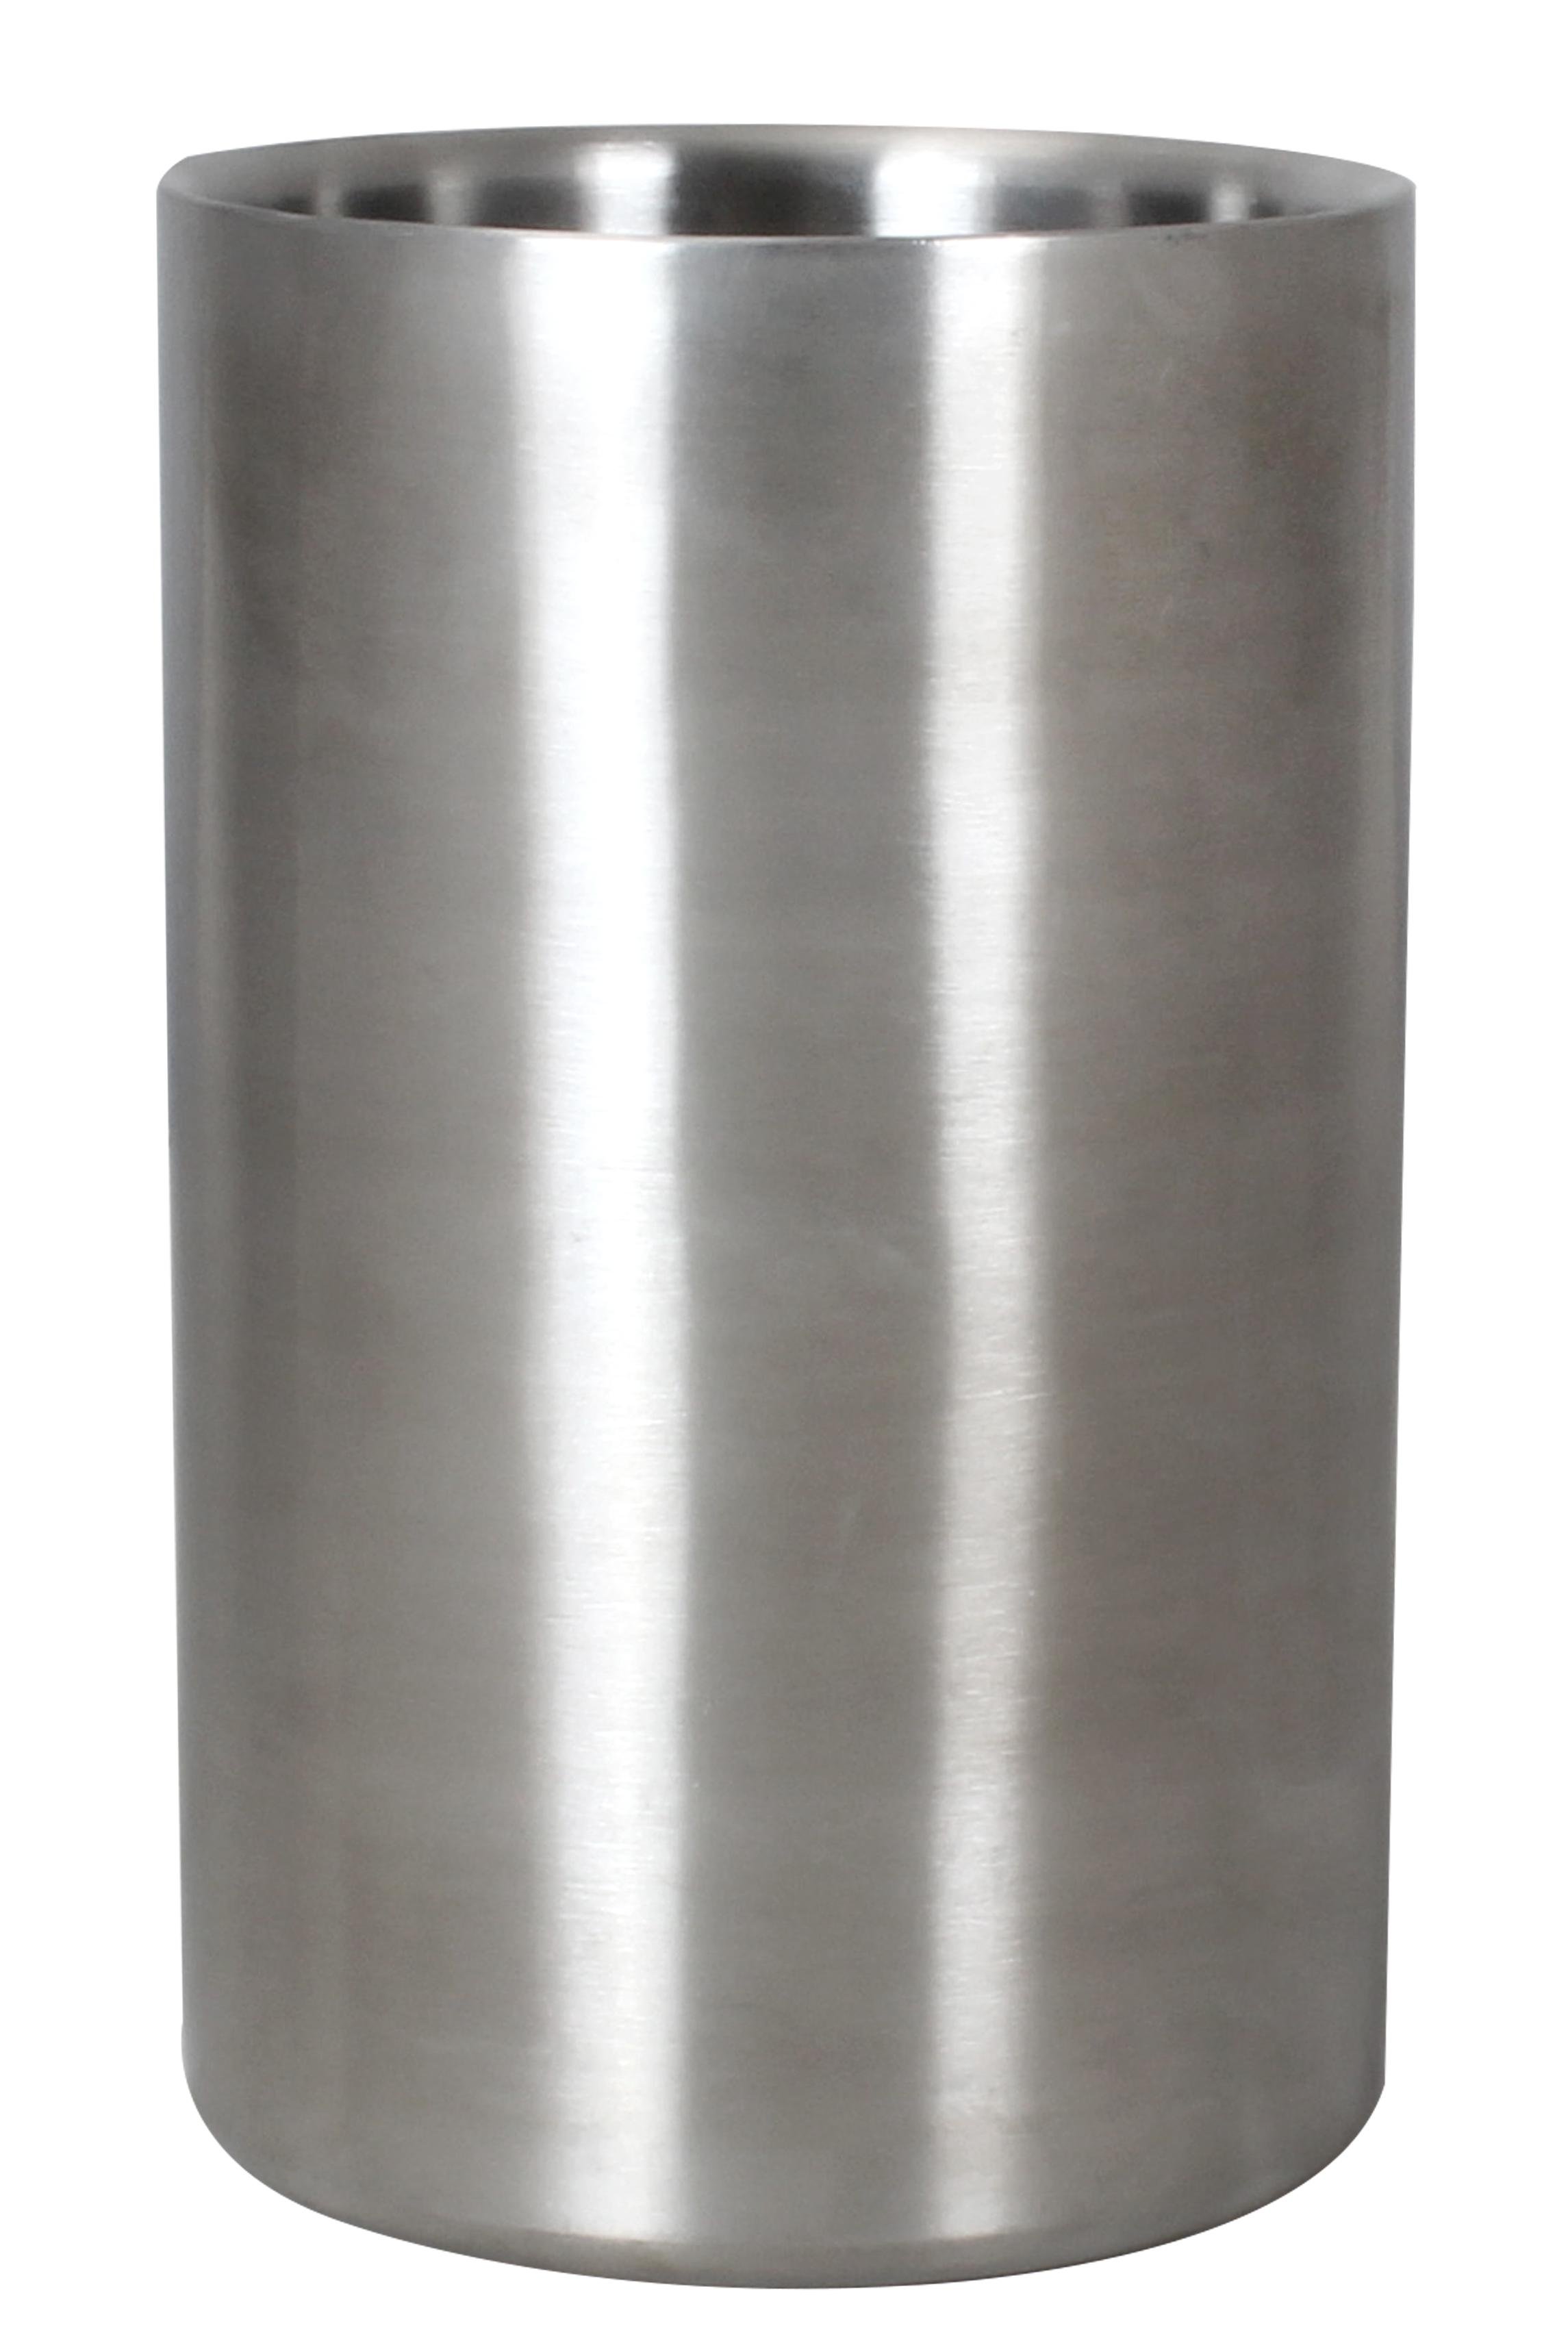 Ведро для охлаждения напитков Simplex d 11,5 см (93008)